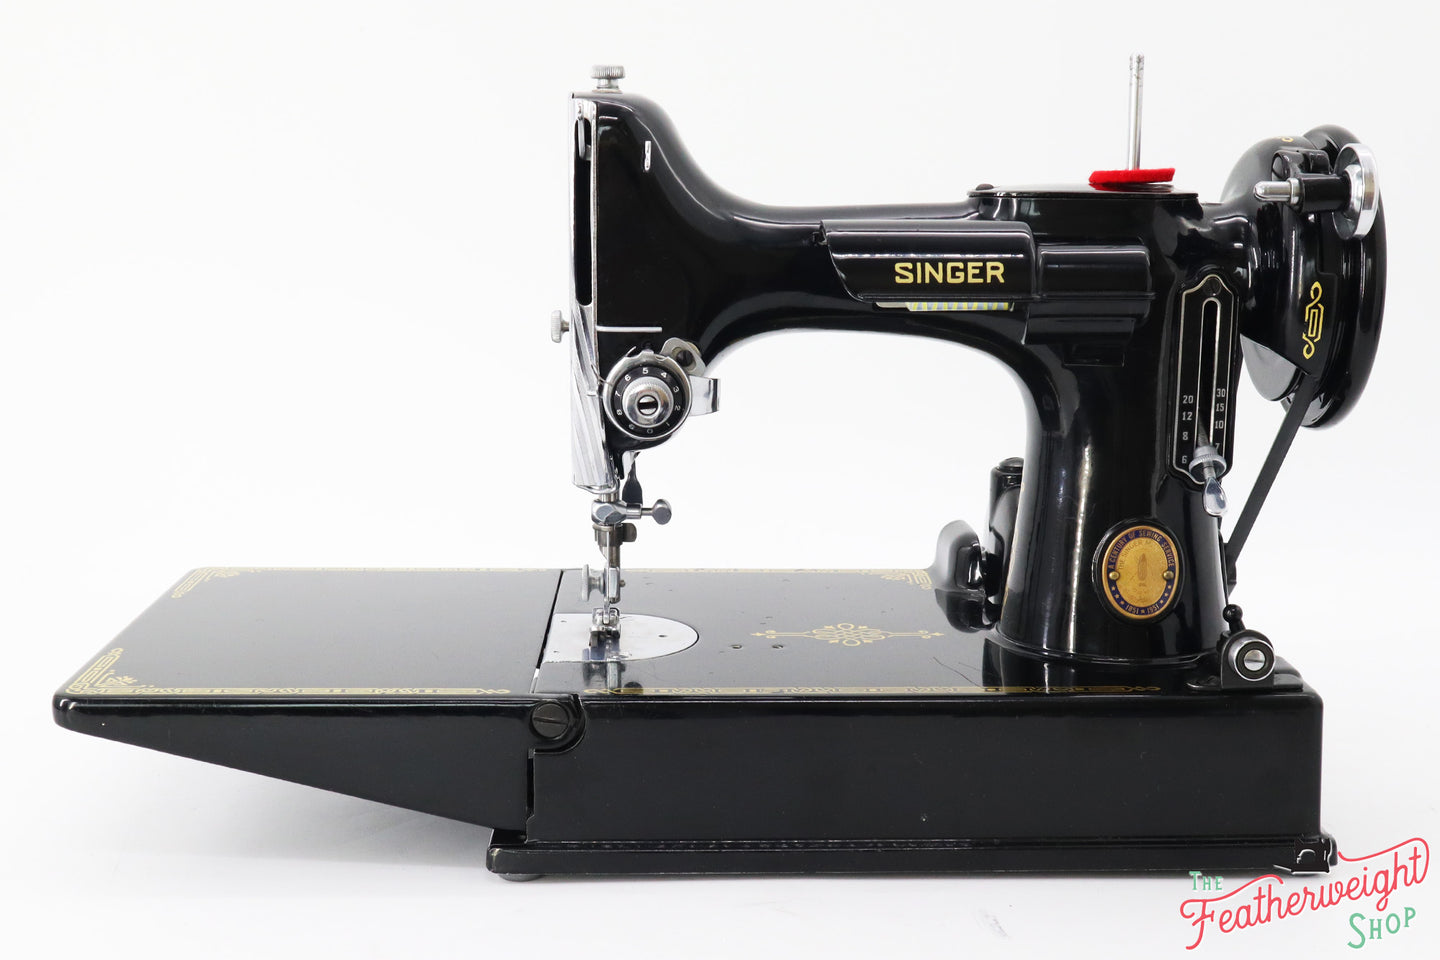 Singer Featherweight 221 Sewing Machine, Centennial: AK072***